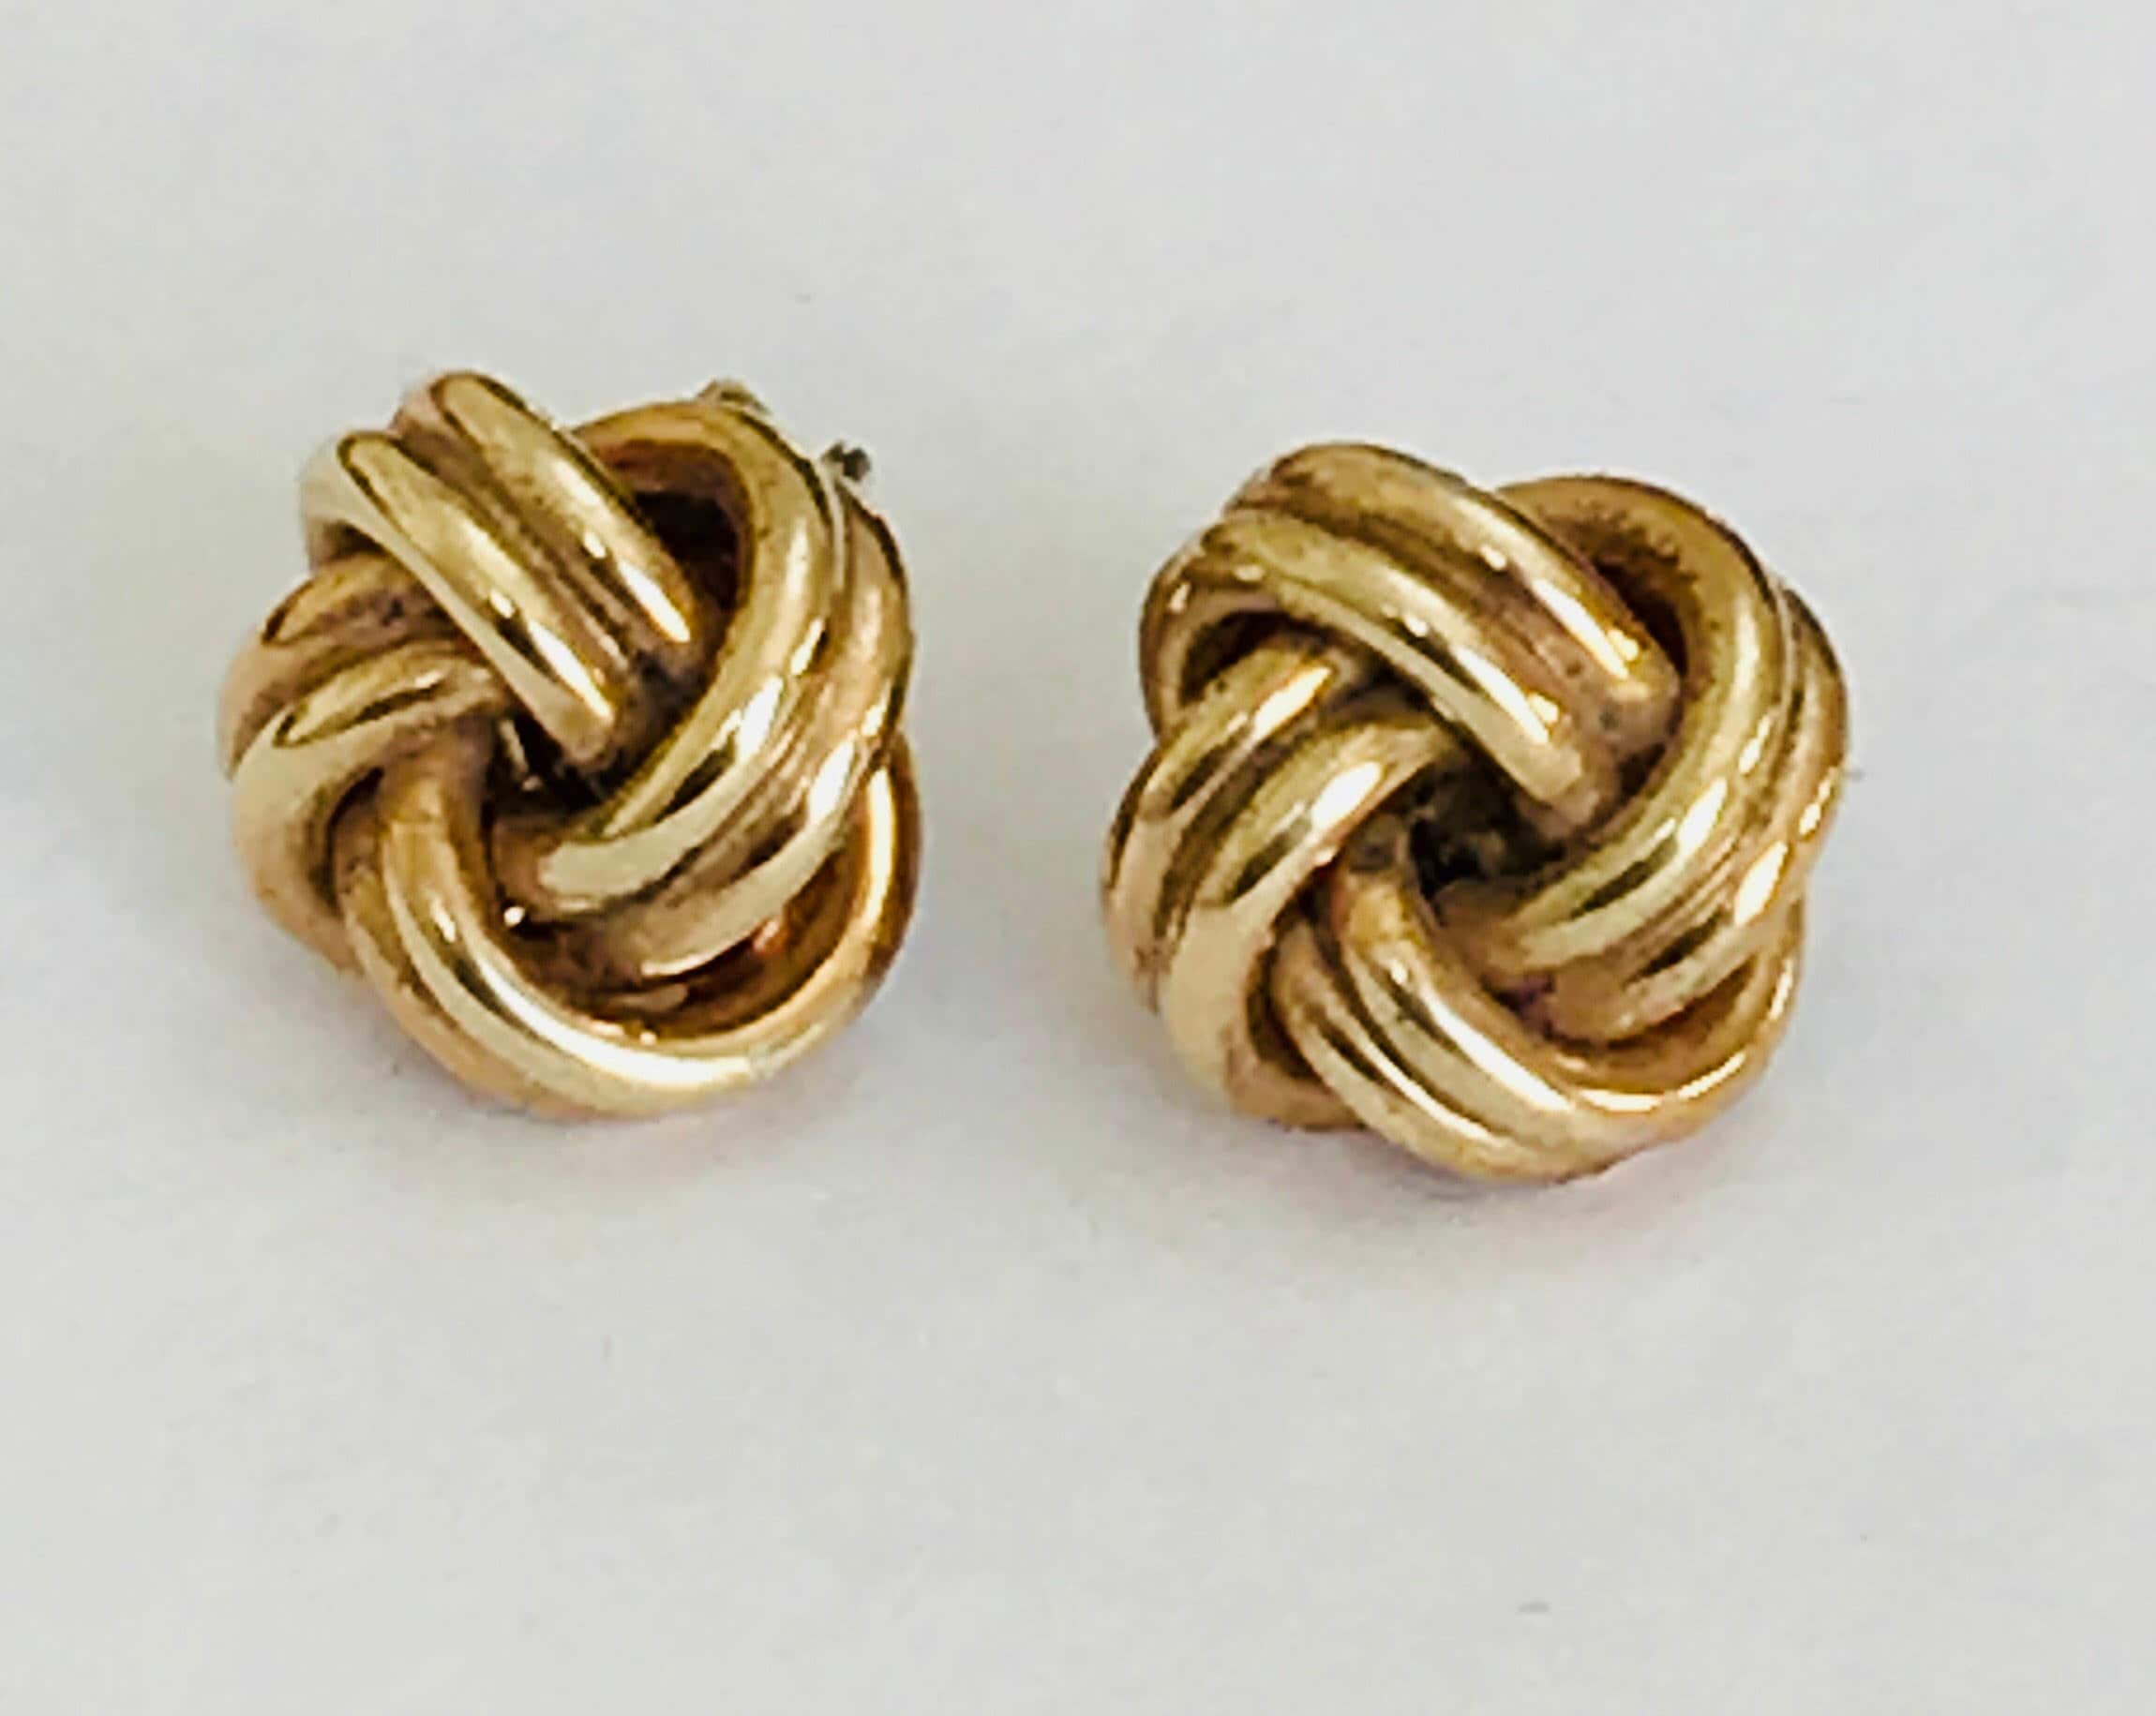 Stunning vintage 9ct yellow gold knot stud earrings - hallmarked